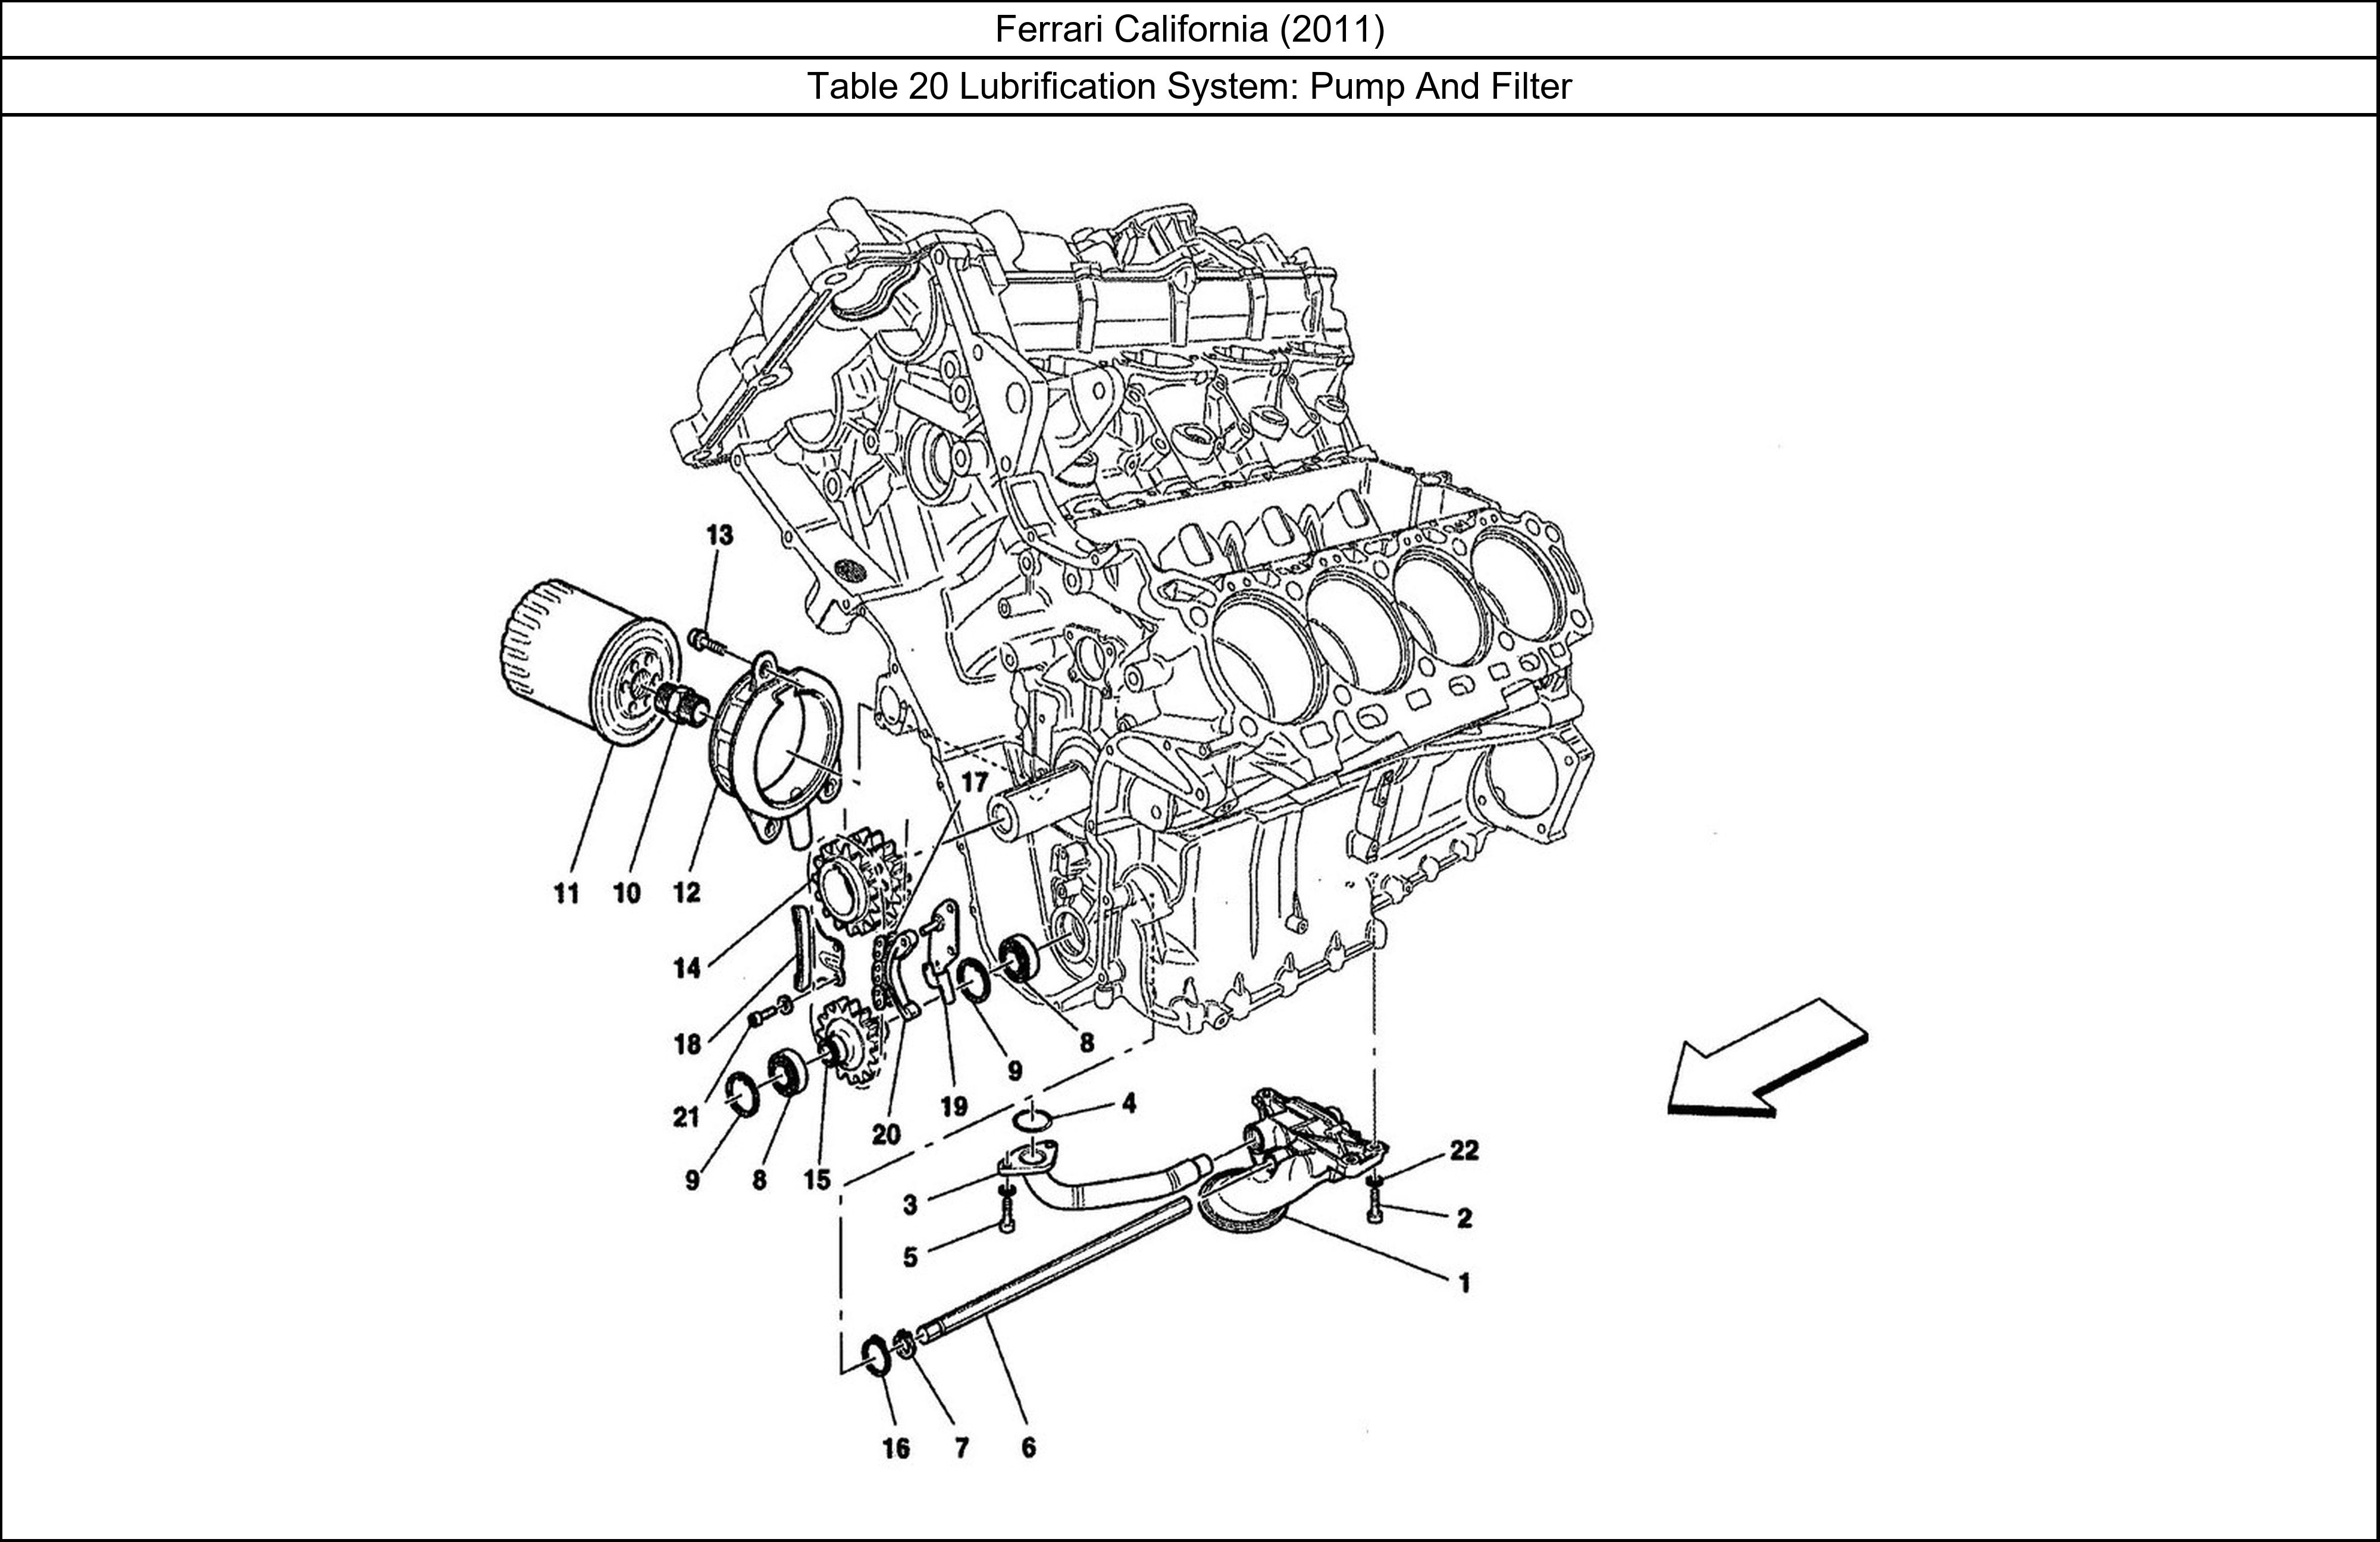 Ferrari Parts Ferrari California (2011) Table 20 Lubrification System: Pump And Filter